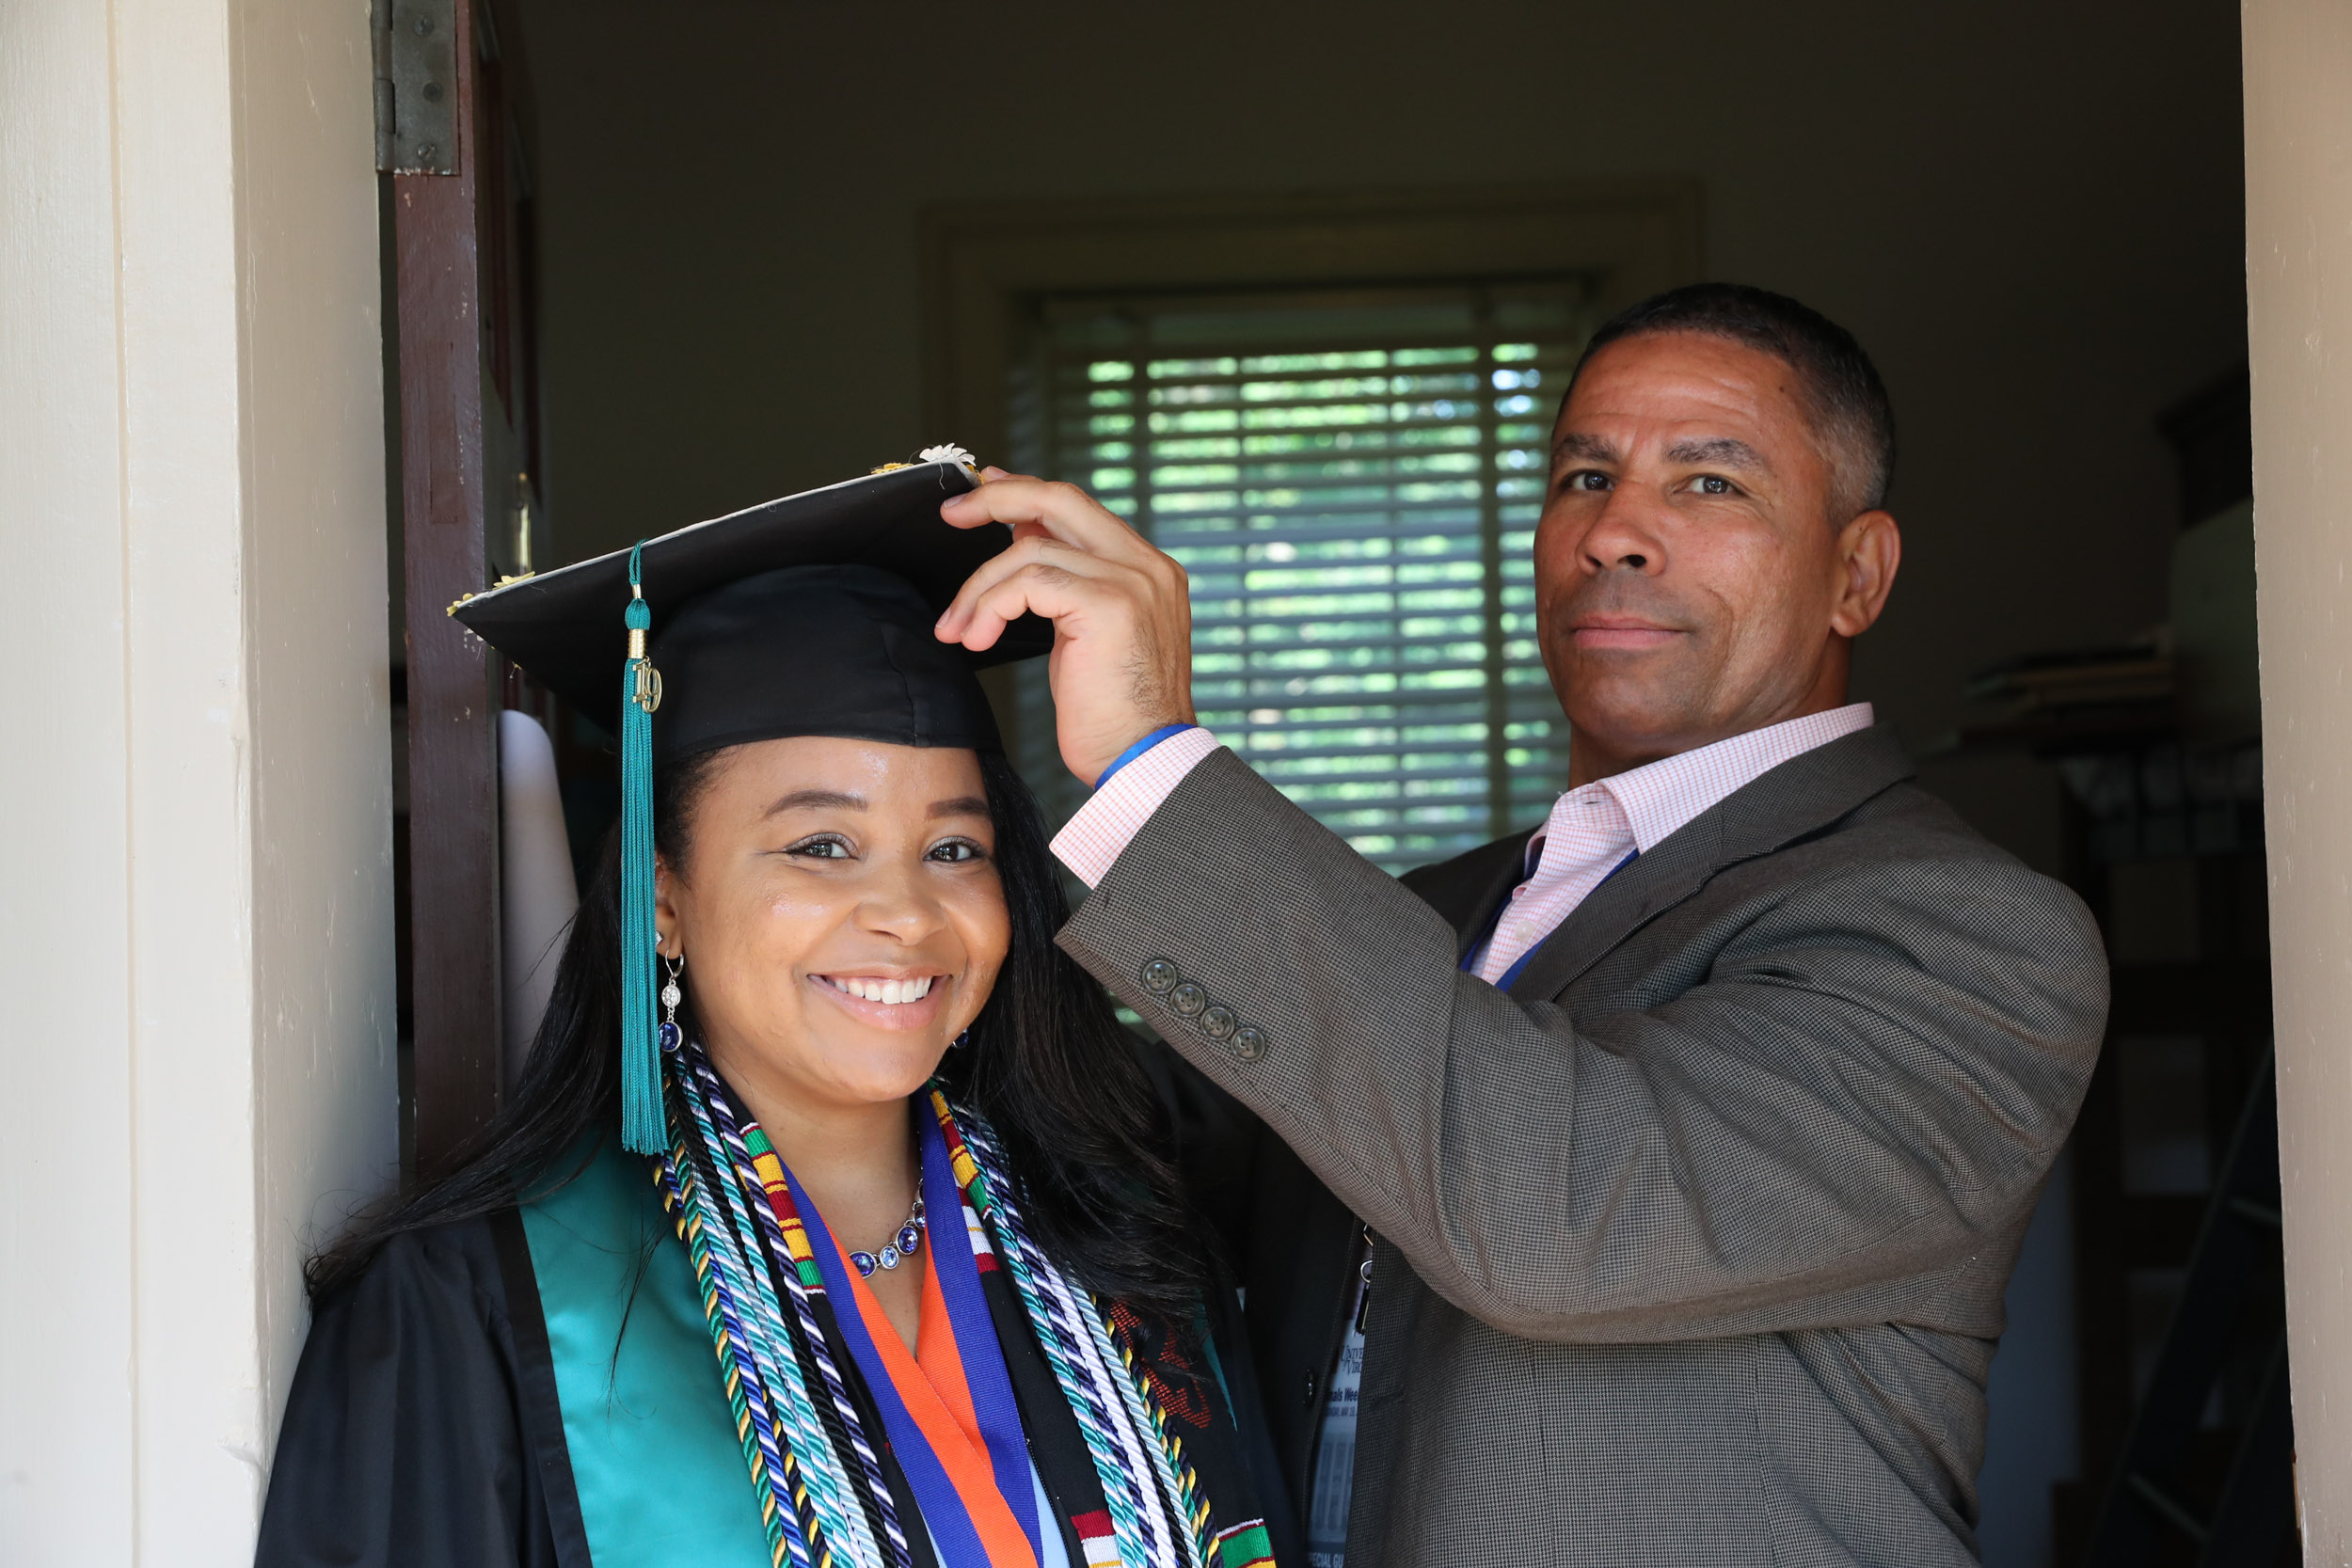 Dad placing his daughters graduation cap on her head